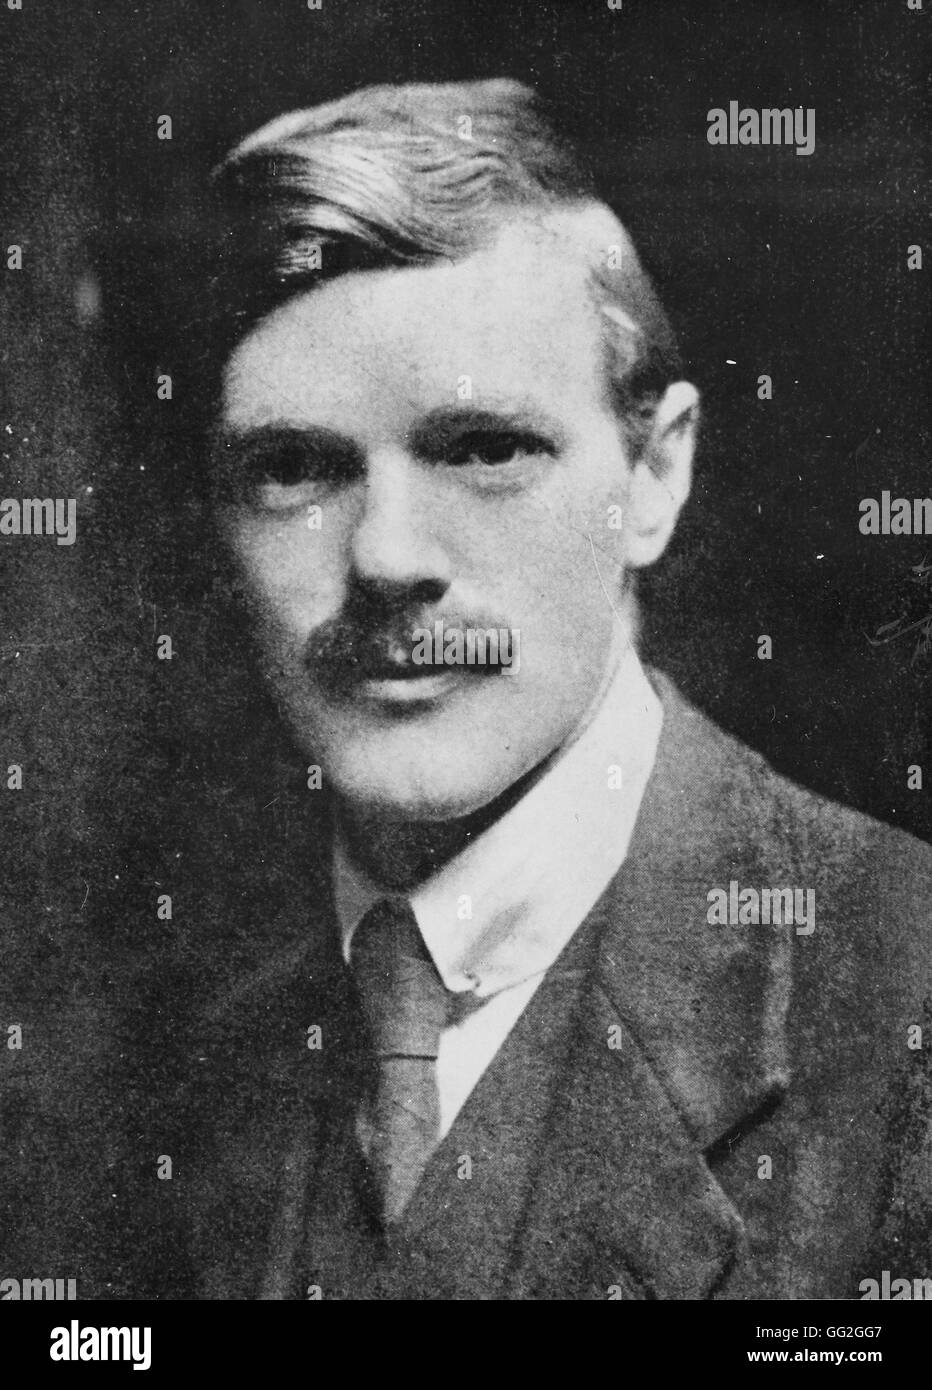 Portrait of David Herbert Lawrence, British author. Photograph taken in 1914 Stock Photo